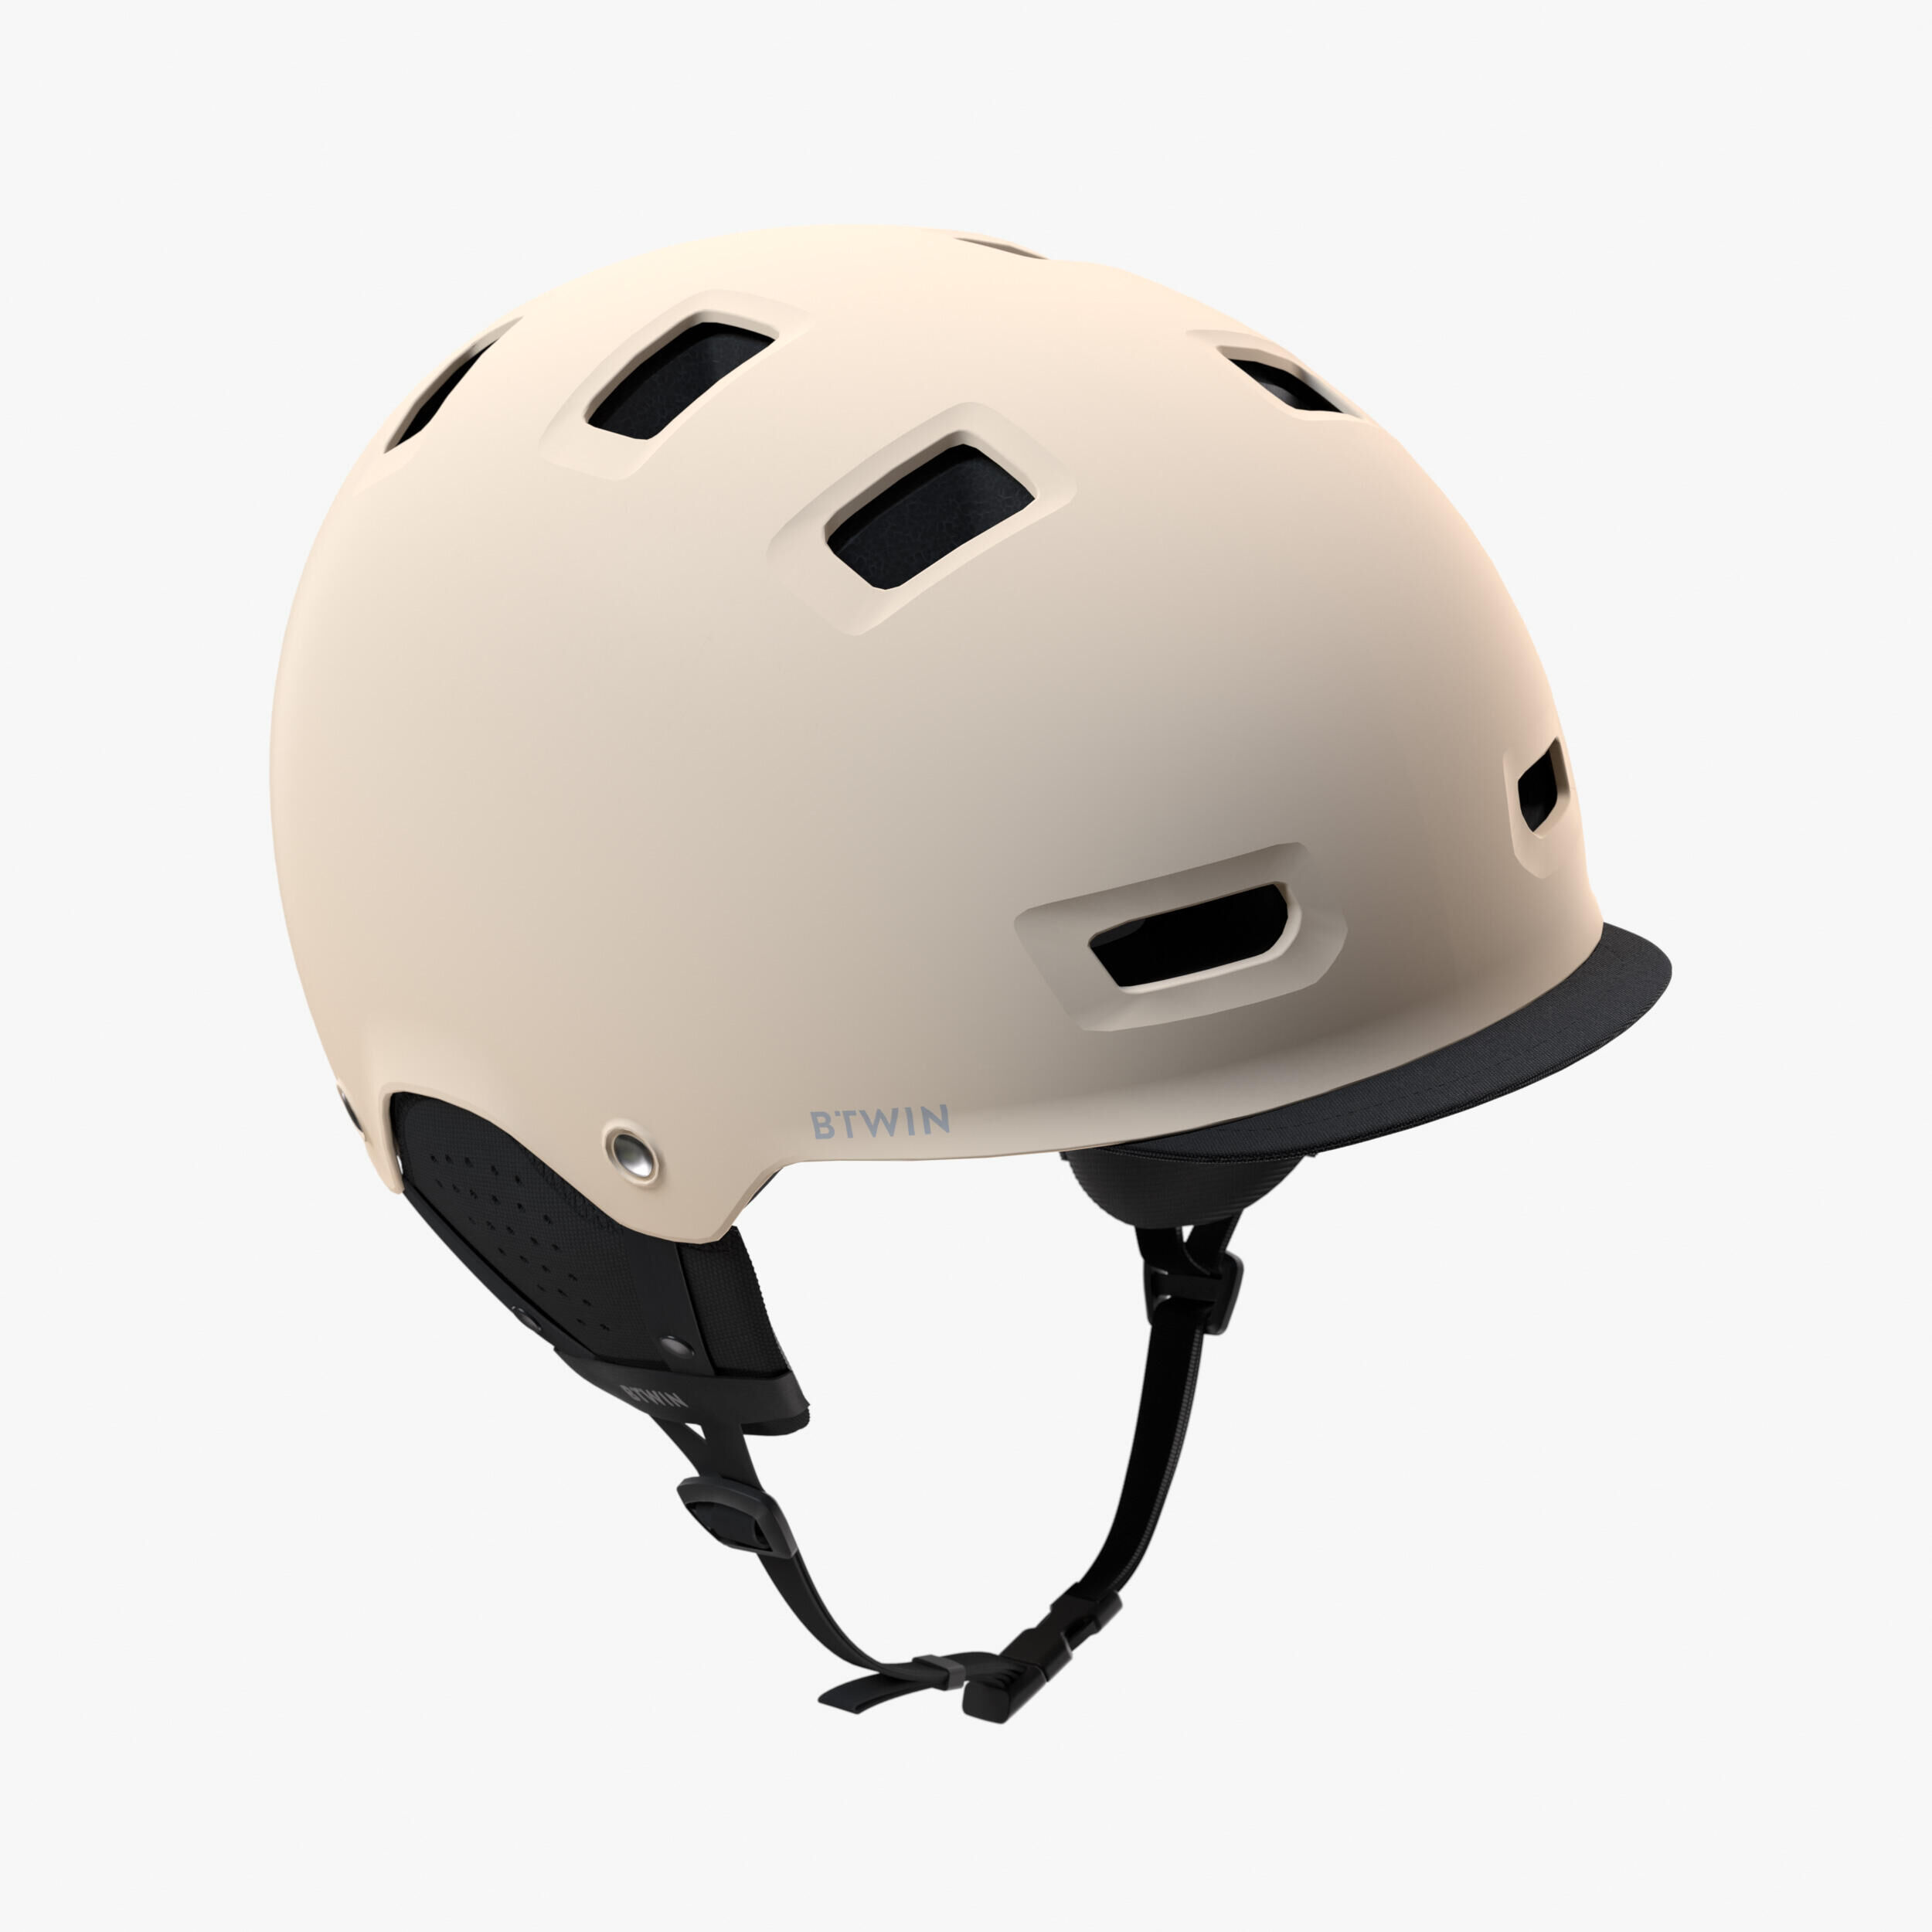 BTWIN City Cycling Bowl Helmet - Beige